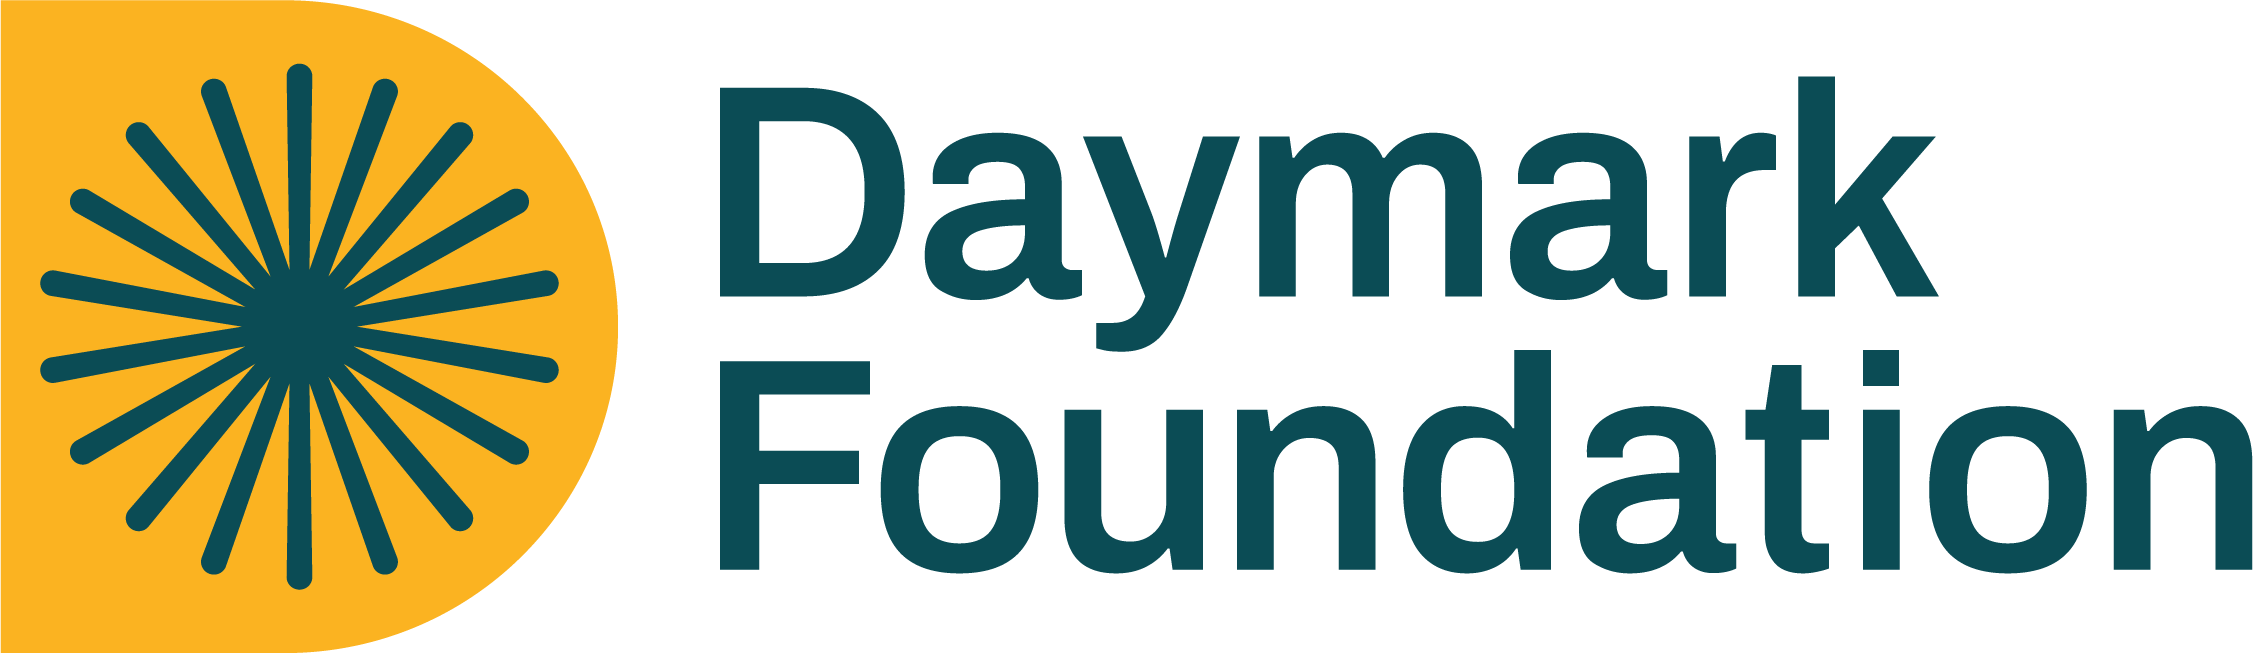 logo-daymark-fondation